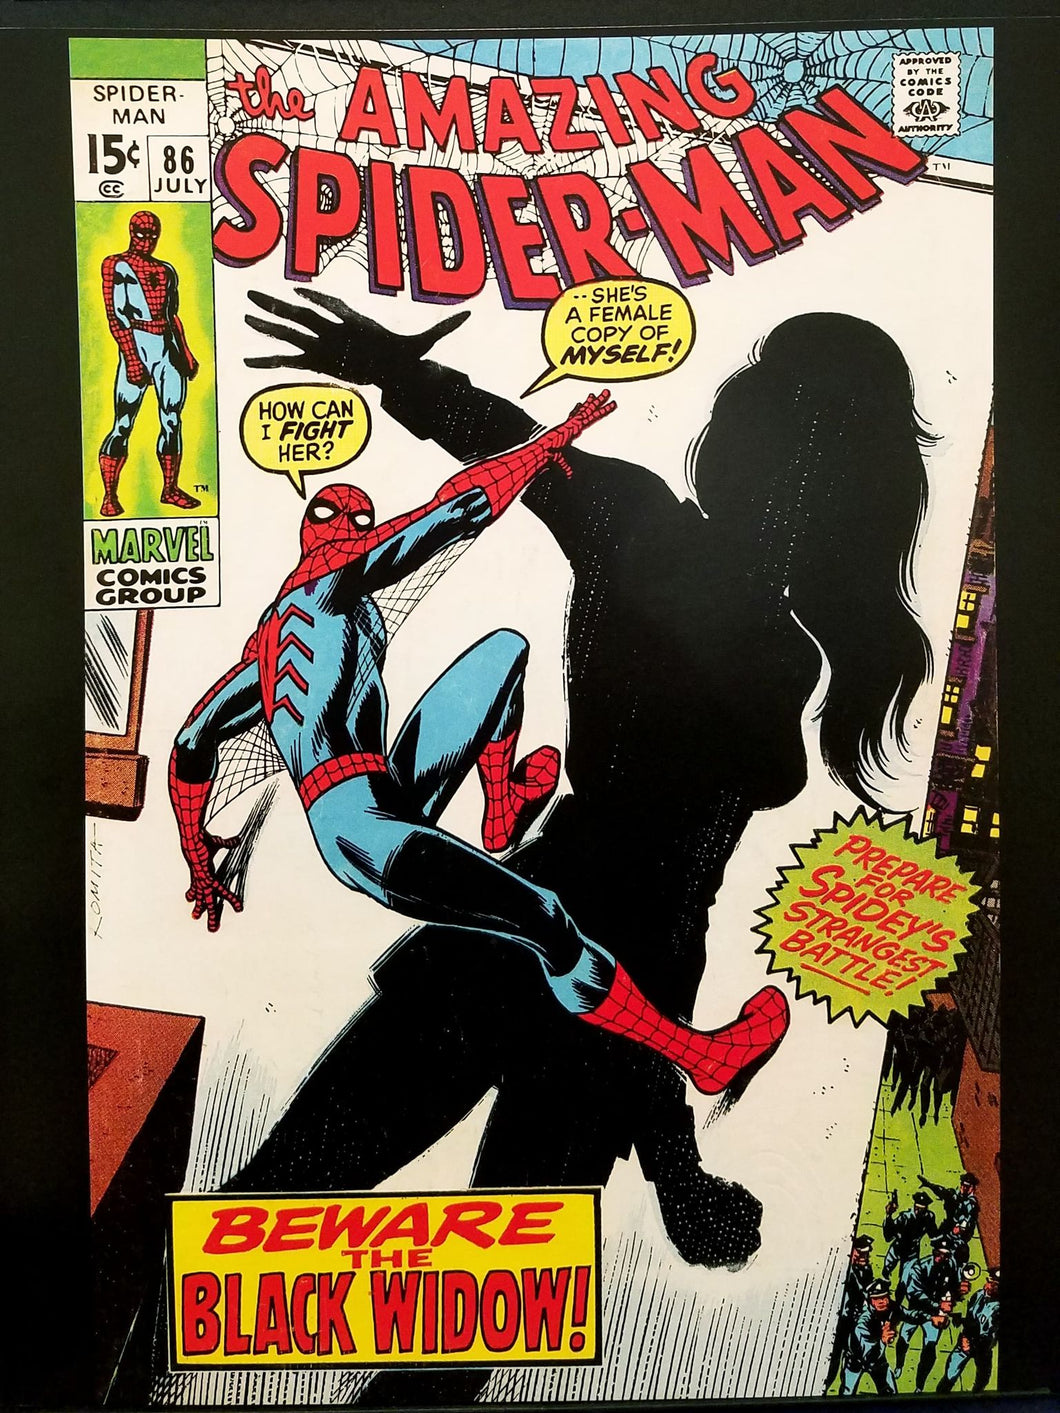 Amazing Spider-Man #86 w/ Black Widow 11x14 FRAMED Art Print, Vintage Marvel Comics